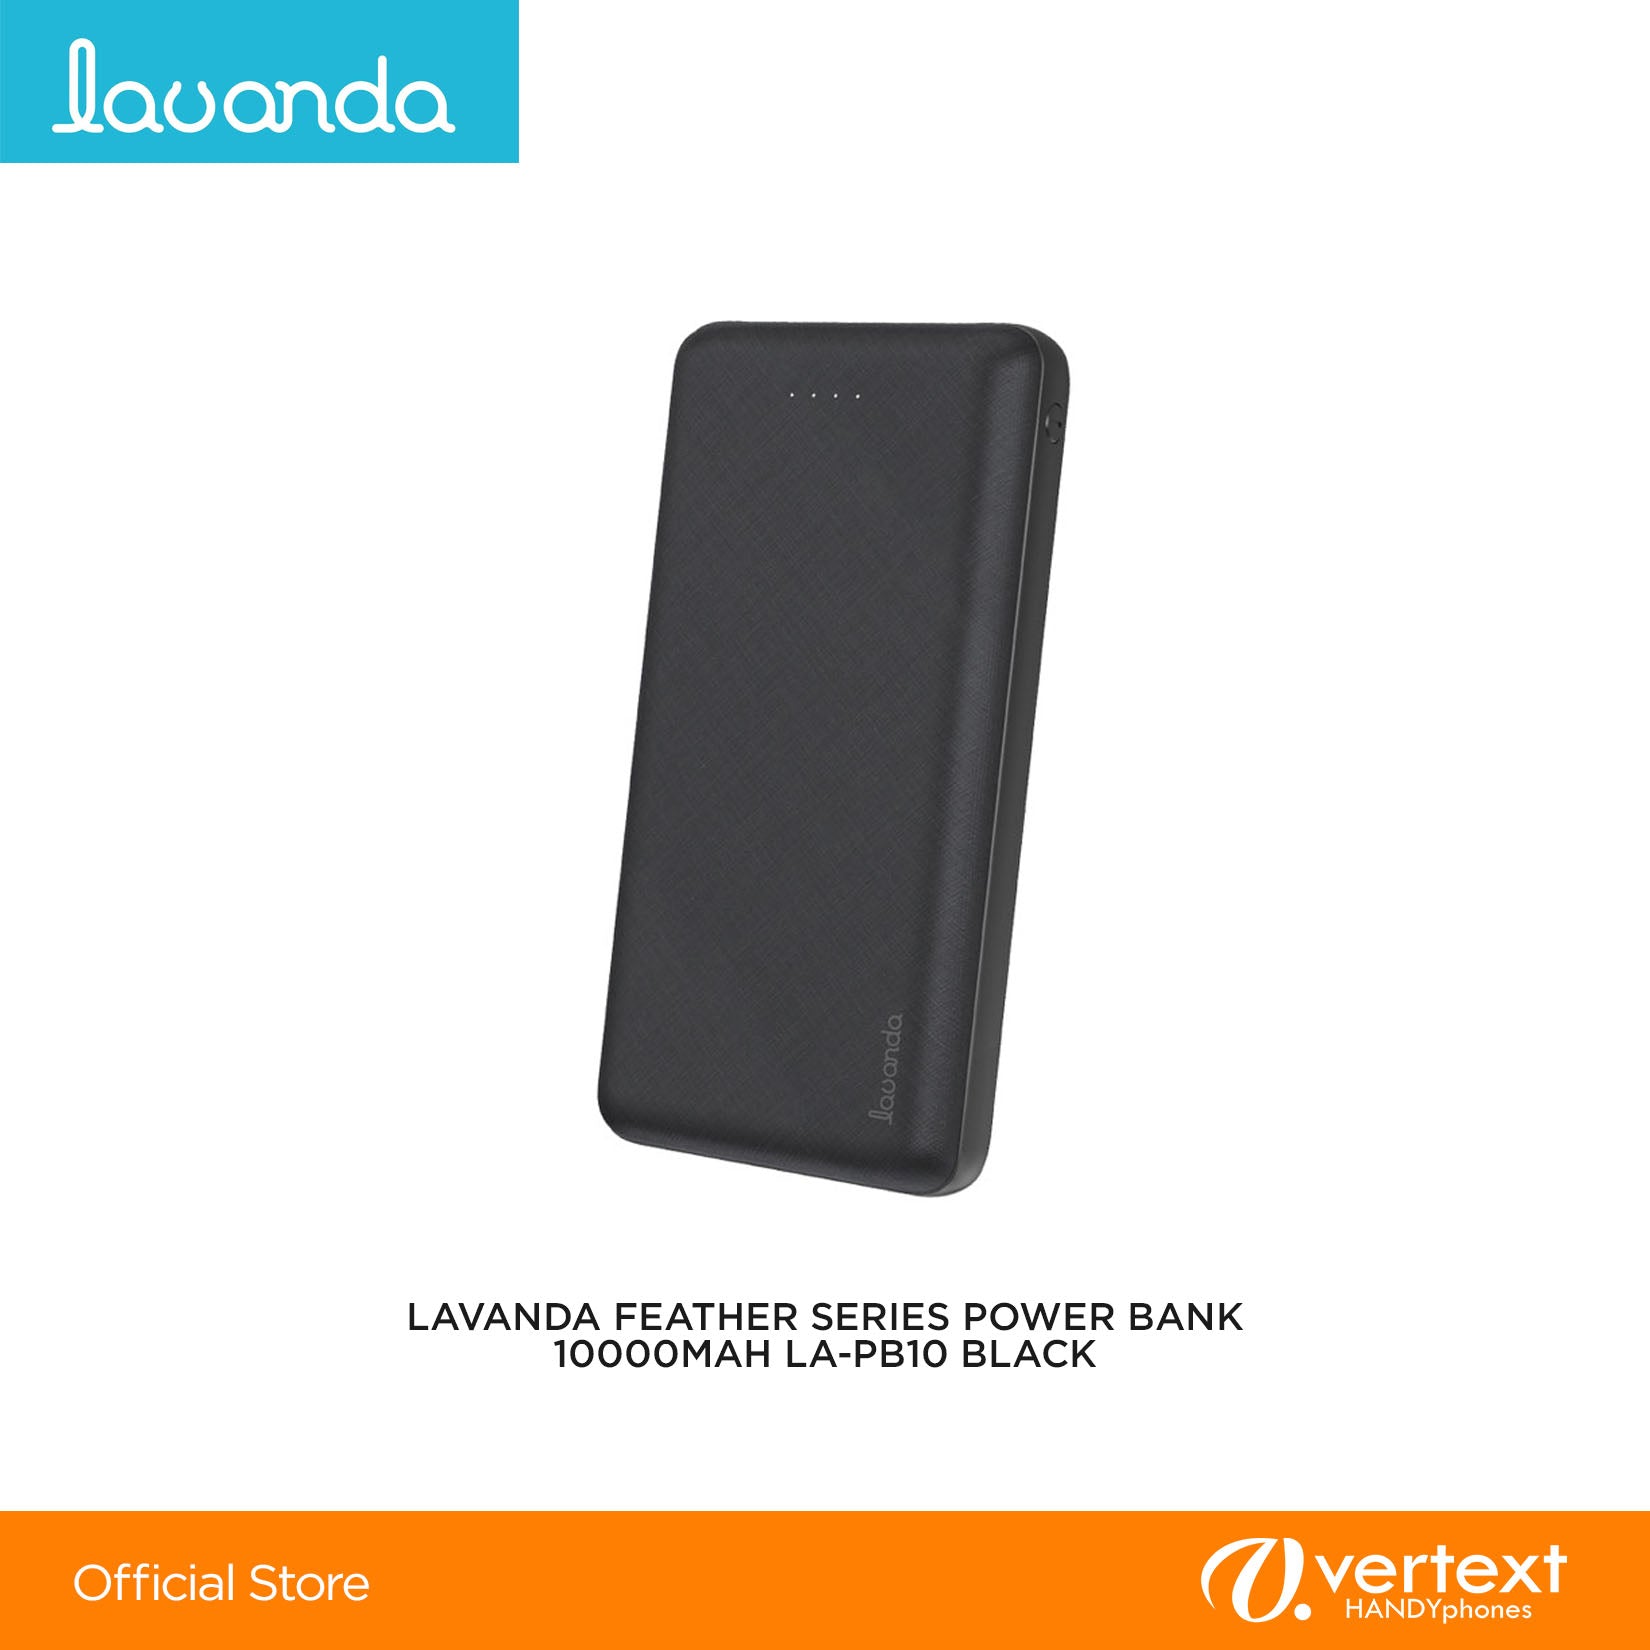 Lavanda Feather Series Power Bank 10000mAh LA-PB10 Black